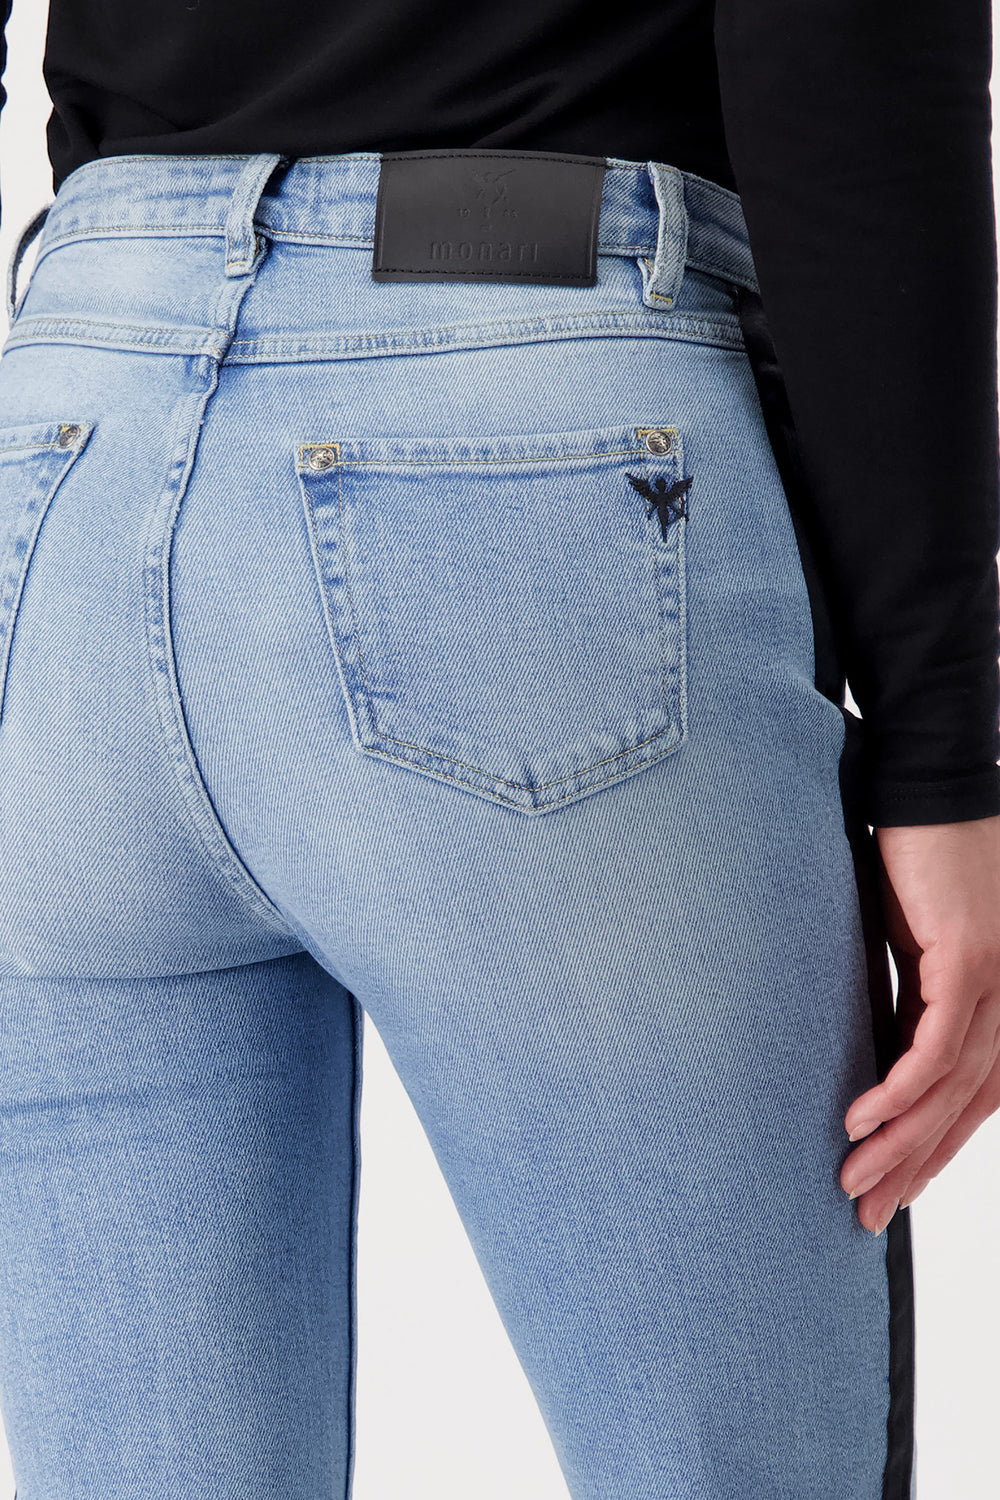 Monari Trousers Jeans Flared 807360